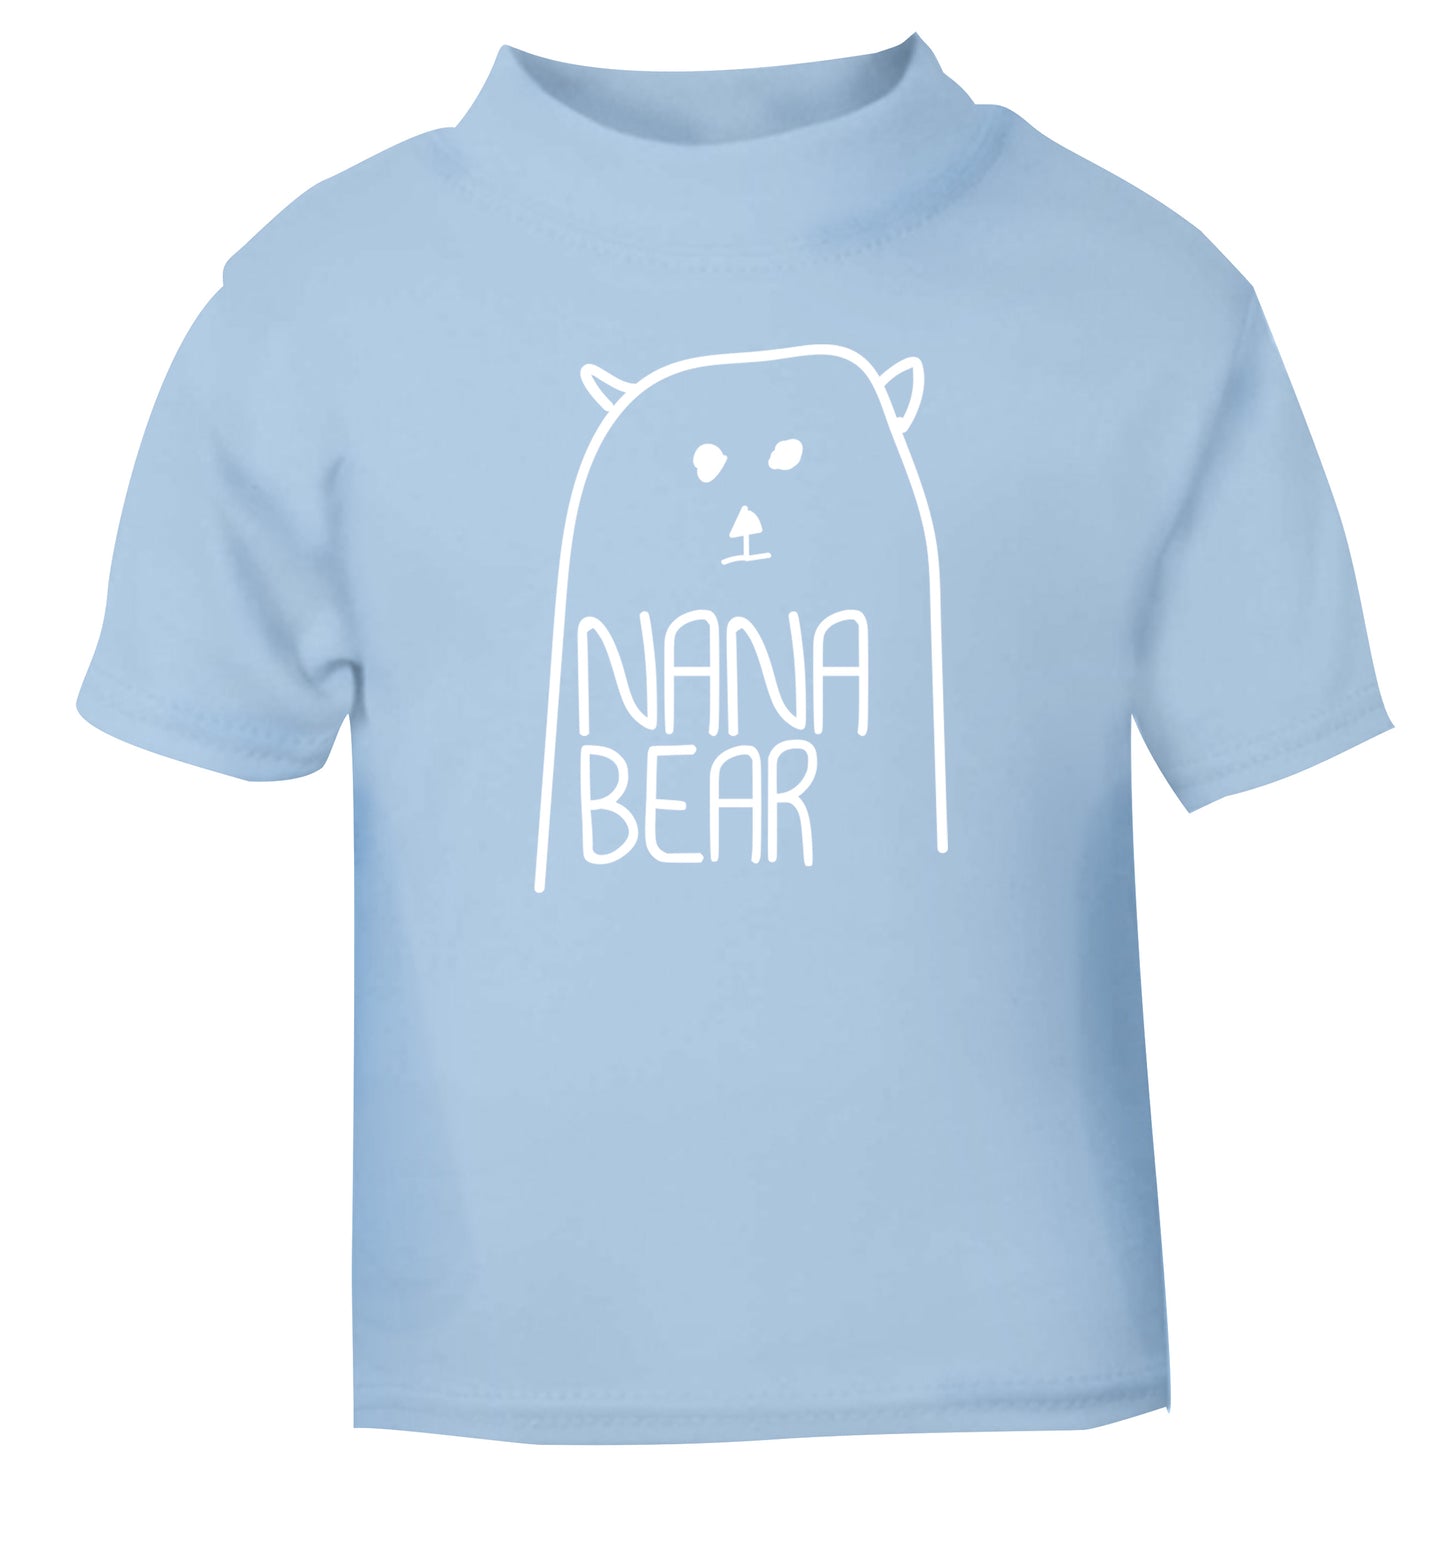 Nana bear light blue Baby Toddler Tshirt 2 Years